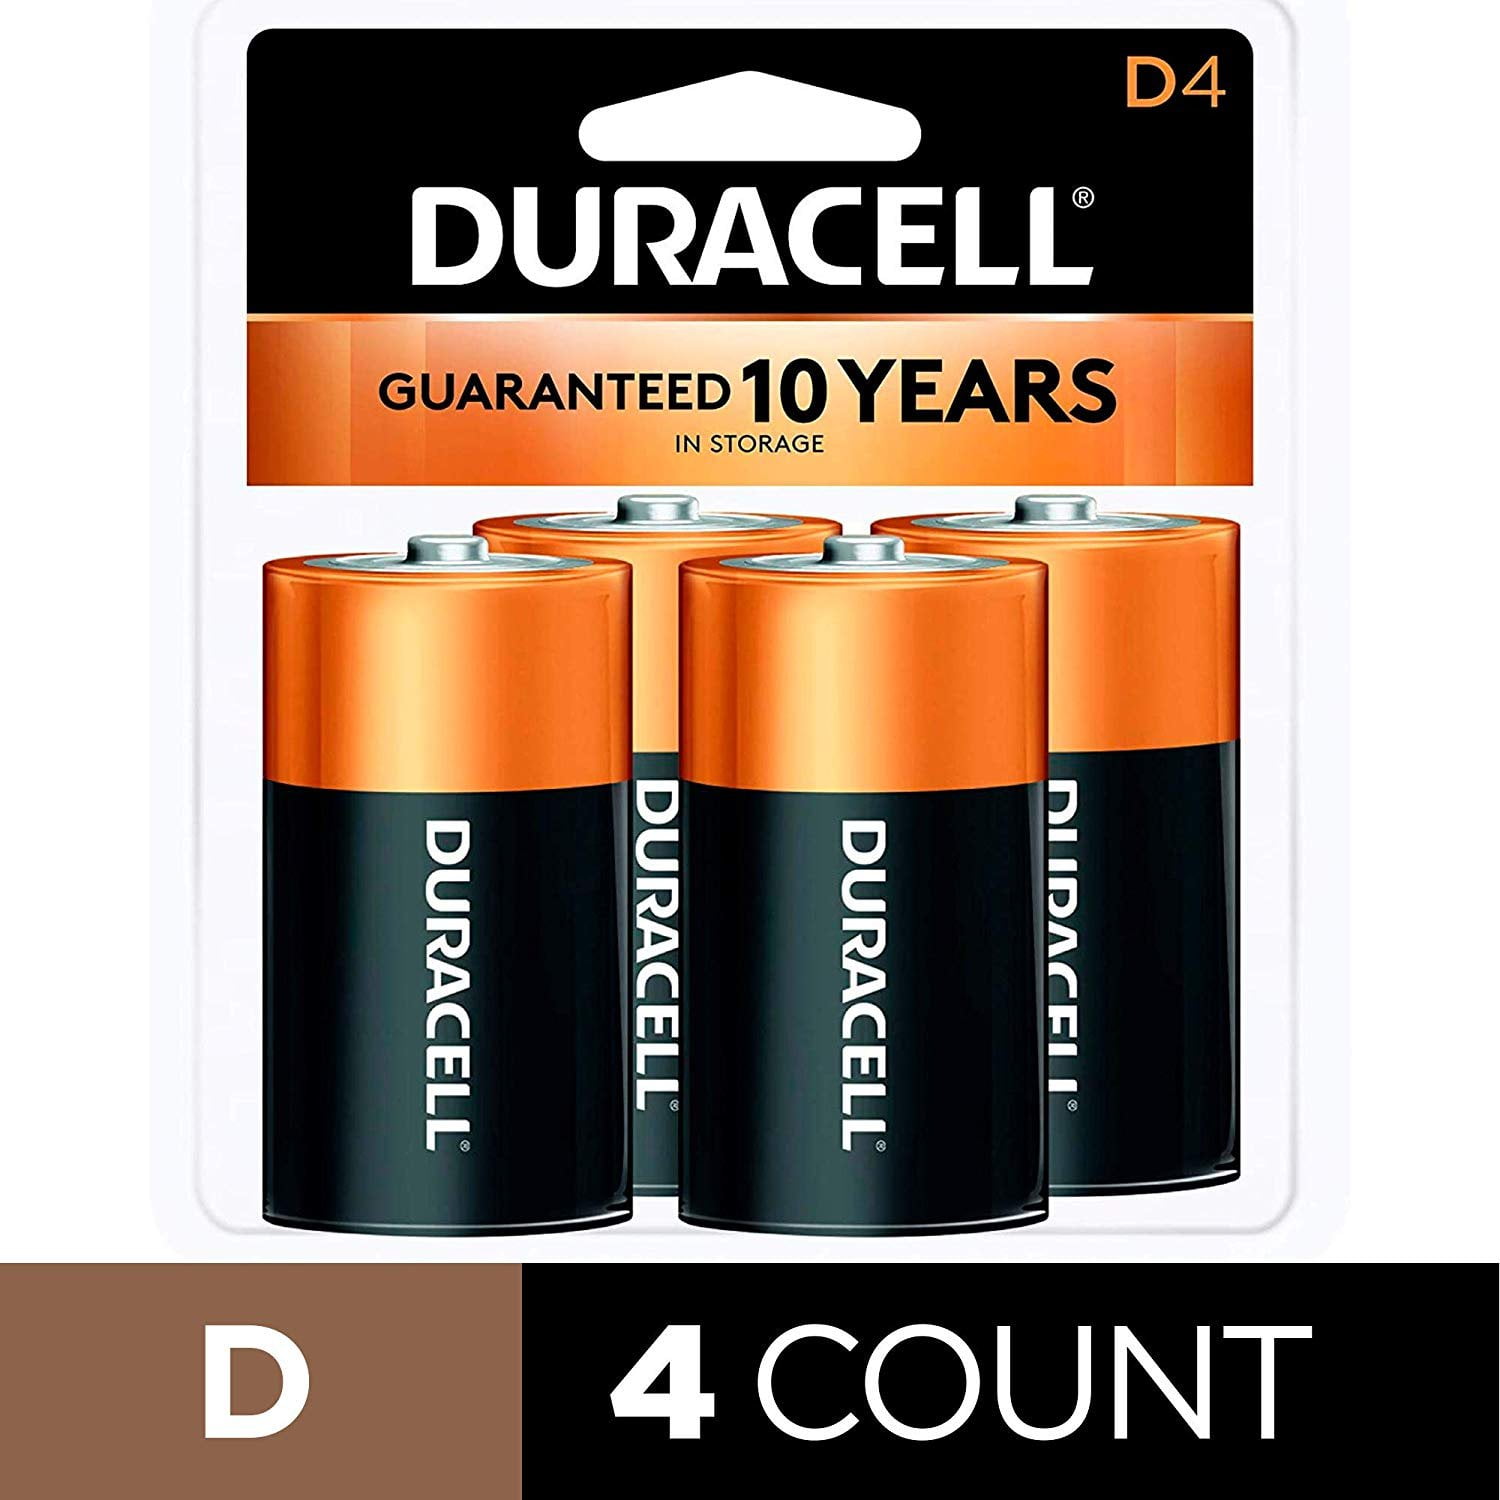 Duracell Optimum AA Alkaline Battery (12-Pack), Double A Batteries  004133303258 - The Home Depot